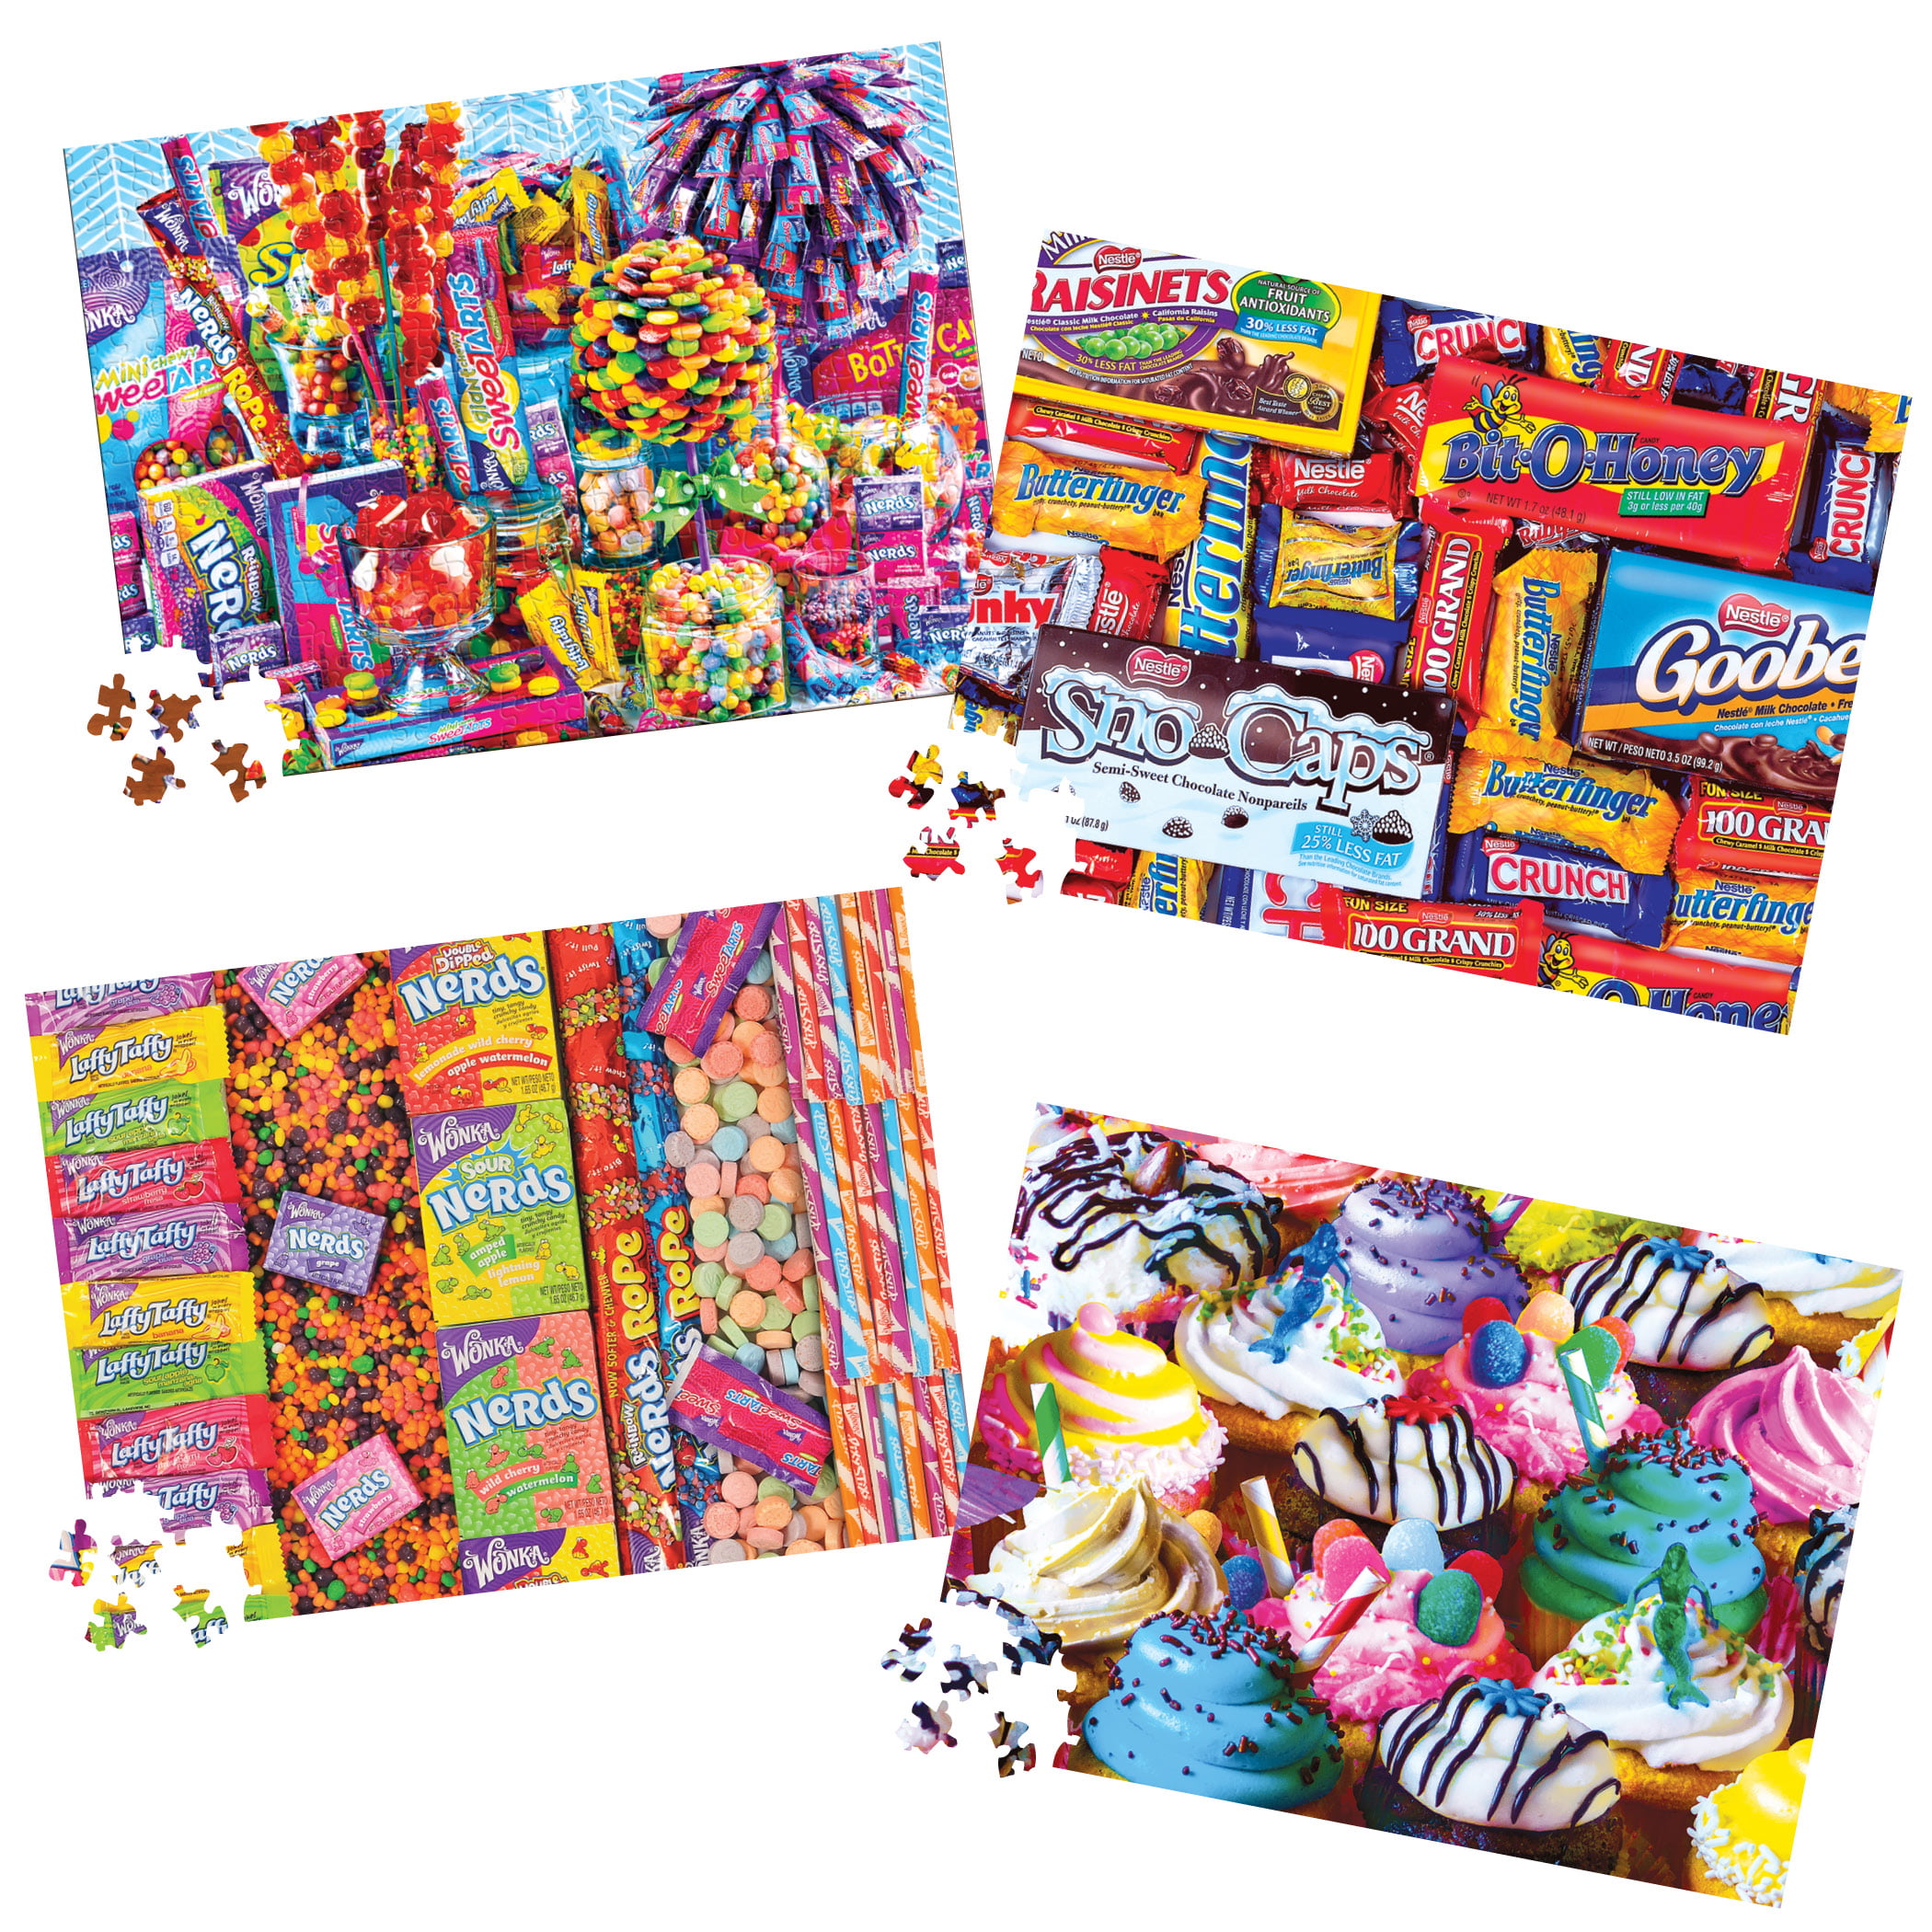 Masterpieces SWEET SHOPPE Swirls of Sugar 500 piece jigsaw puzzle NEW IN BOX 